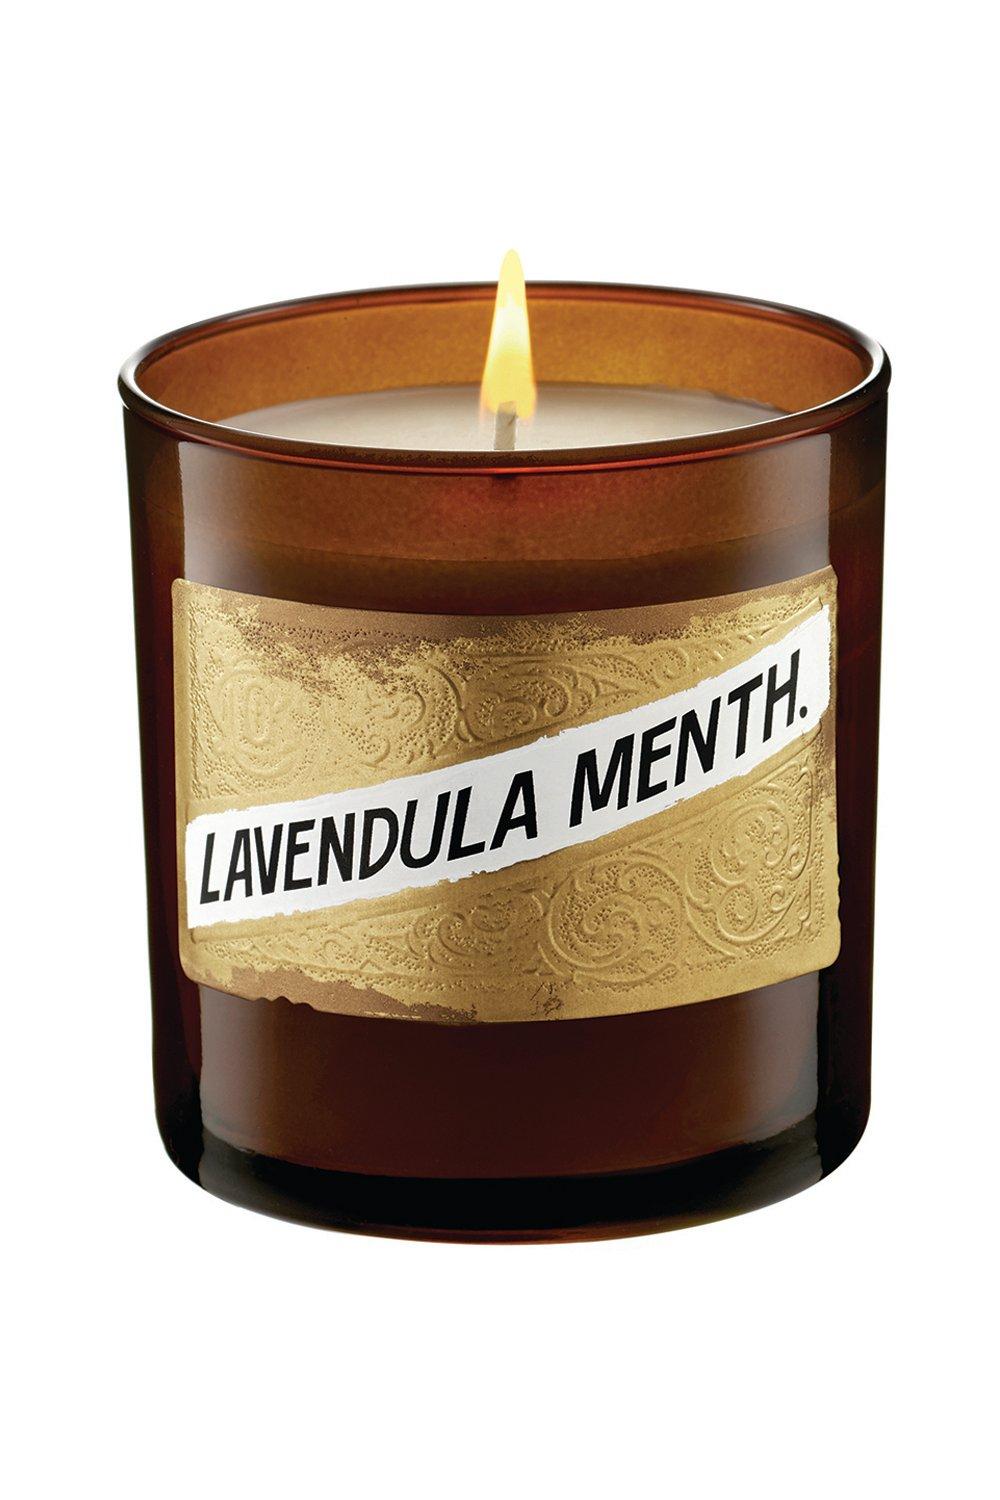 Lavendula Menth (Lavender Peppermint) Candle